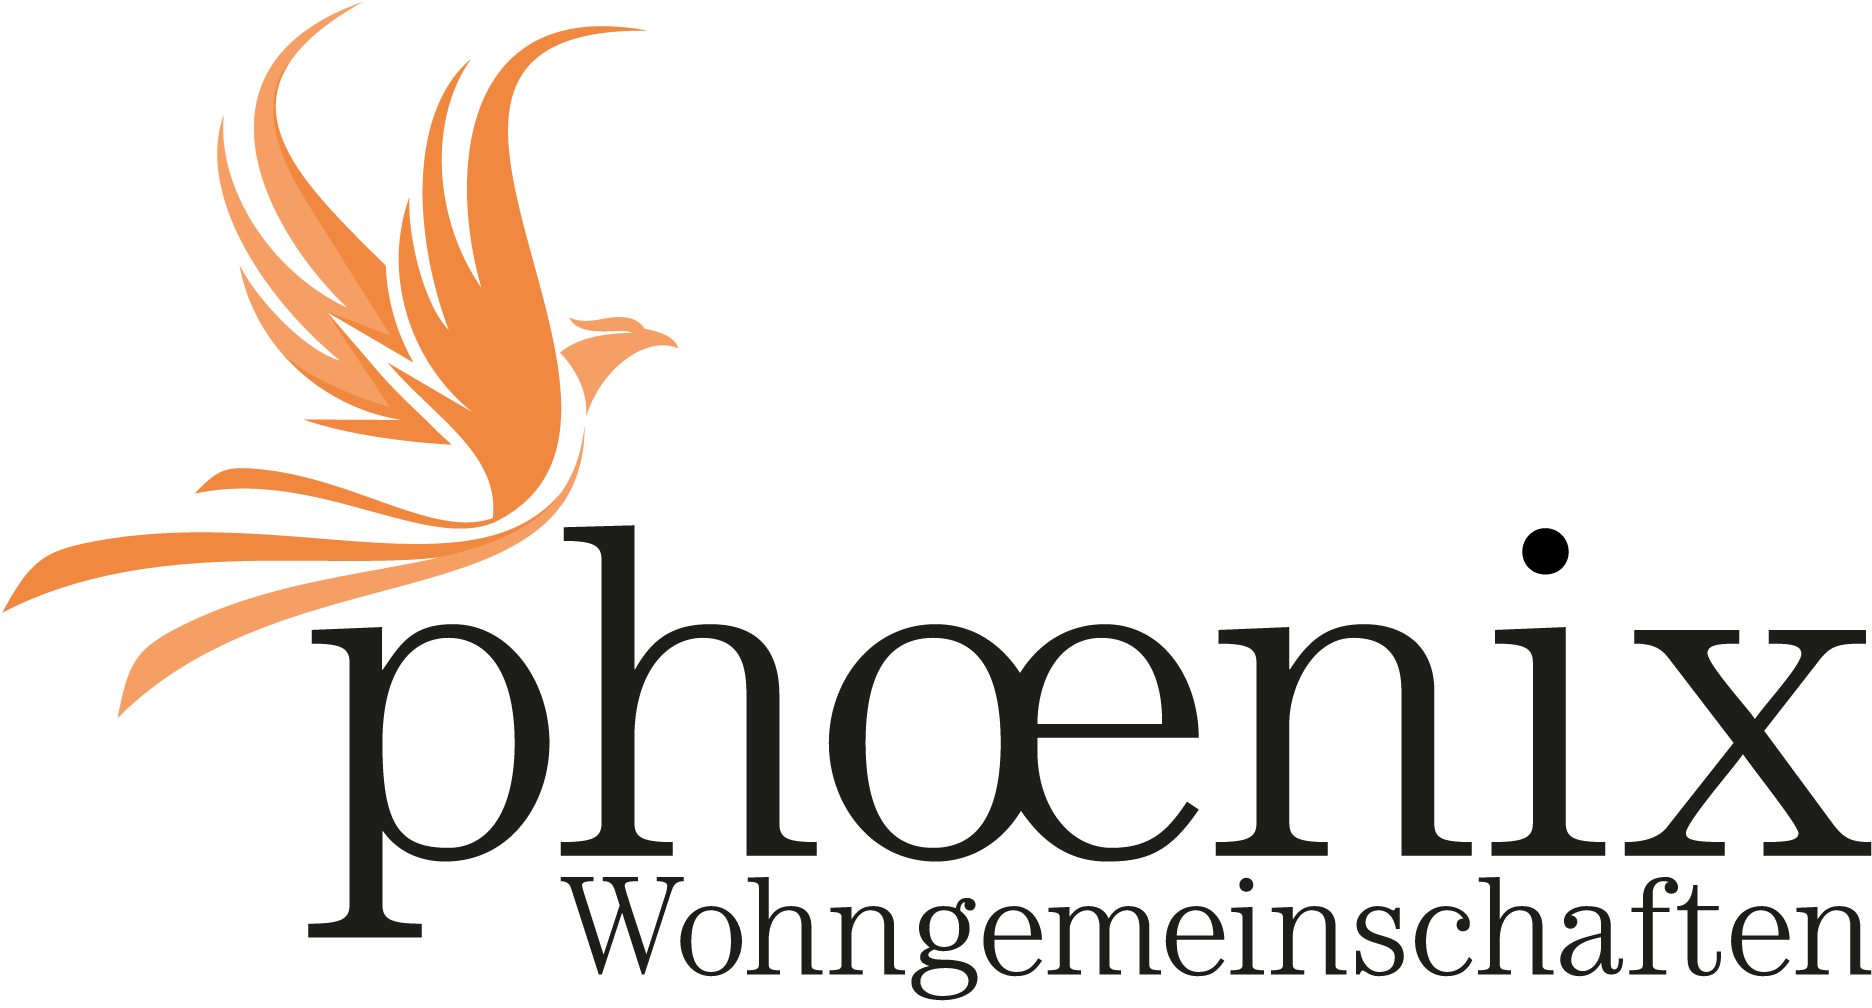 phoenix-logo-2021